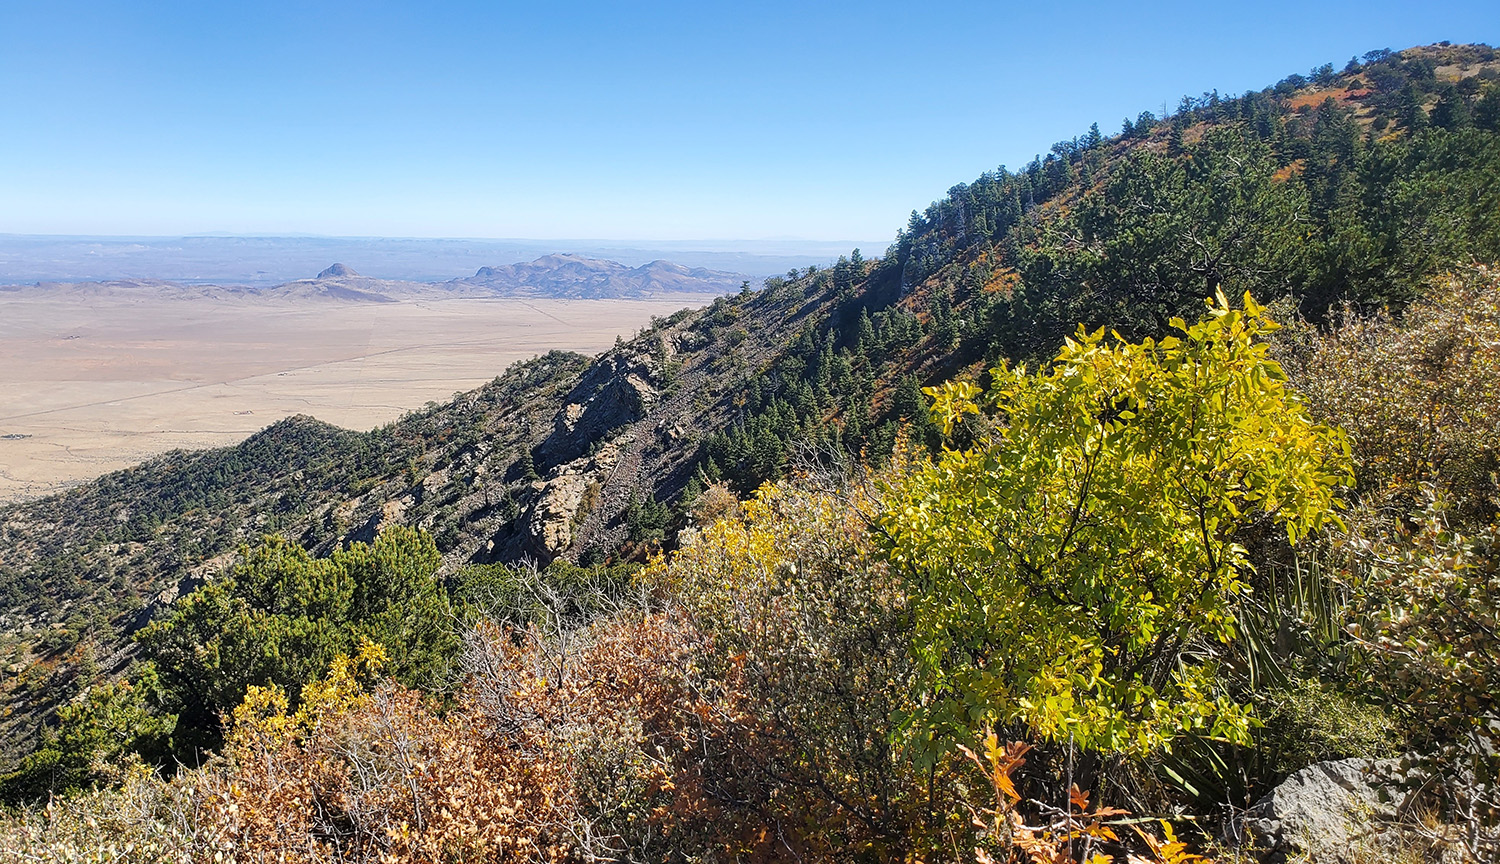 Photograph of vegetation-covered mountain rising above desert lowlands.